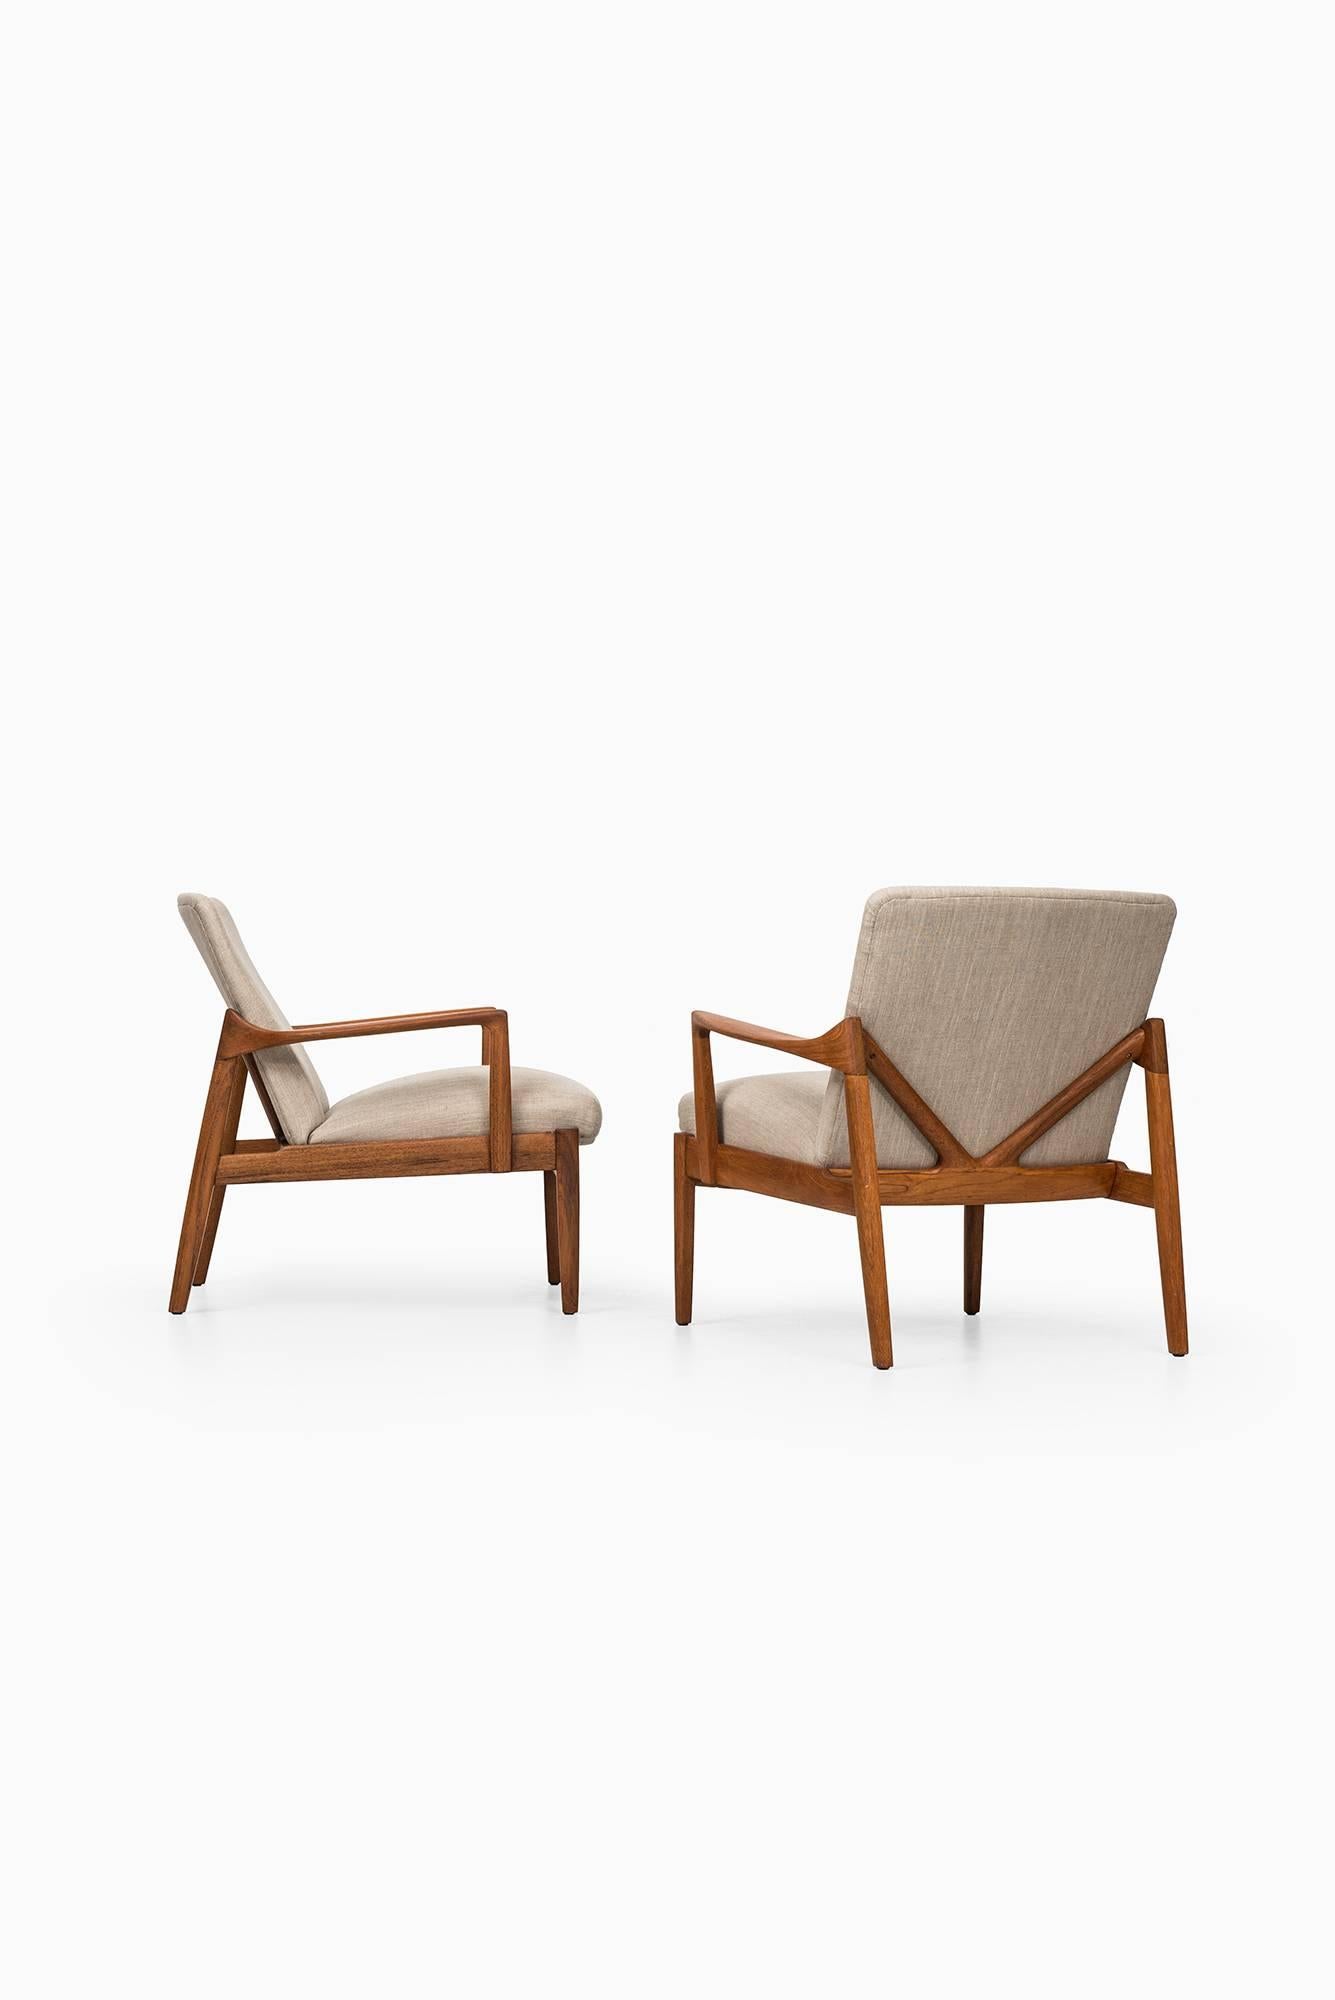 Tove & Edvard Kindt-Larsen Easy Chairs Model FD125 by France & Son in Denmark 2